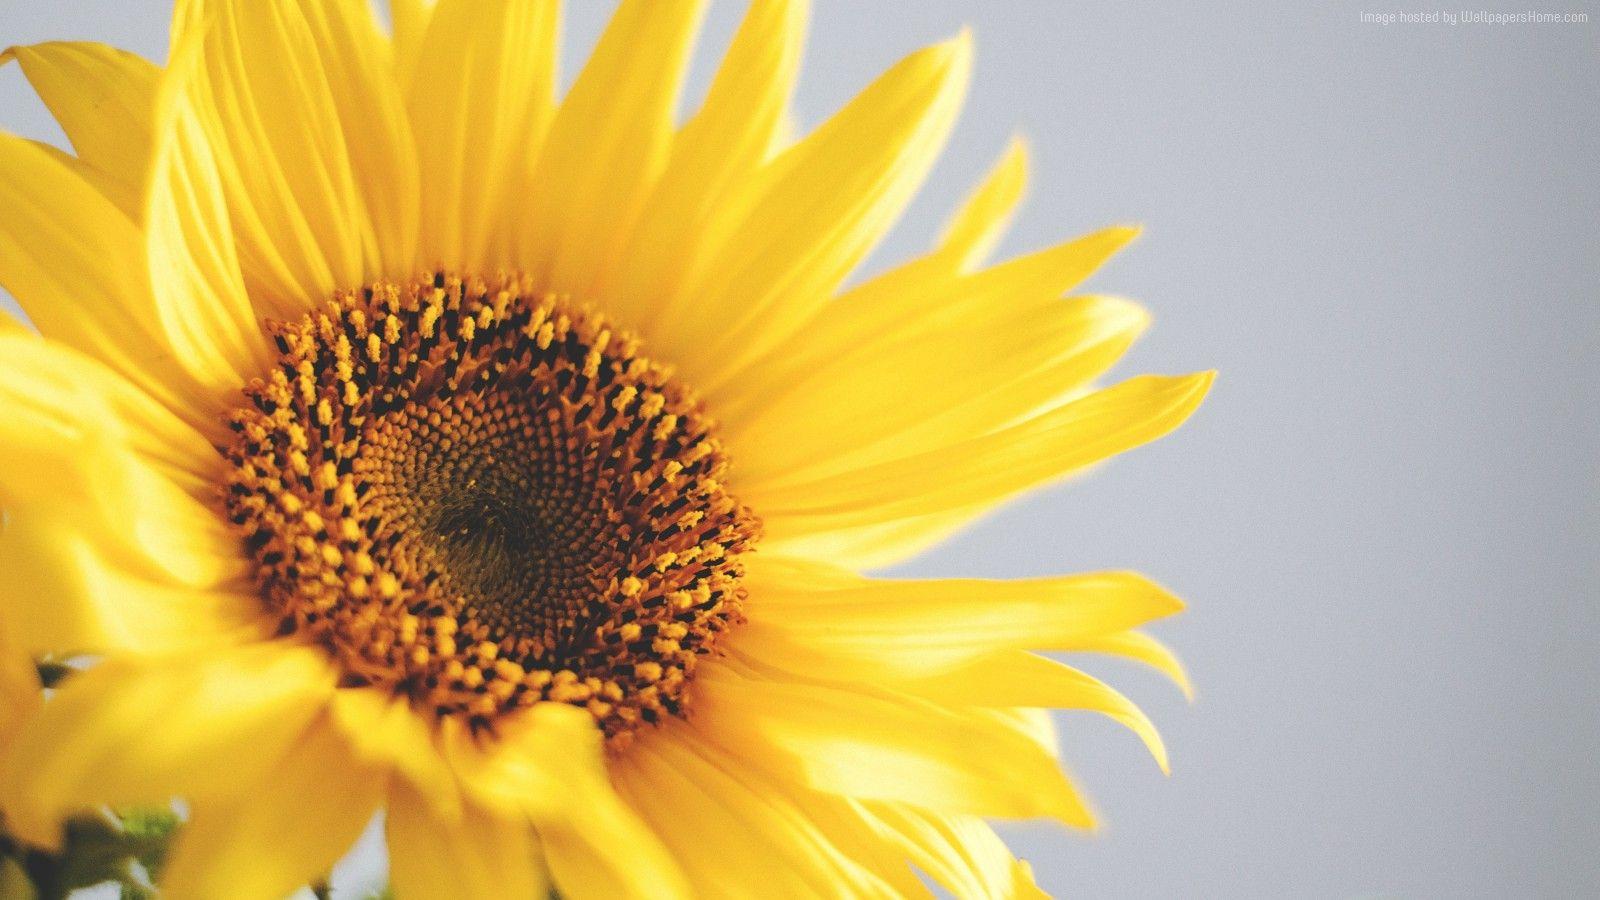 Sunflower HD Desktop Wallpaper, Instagram photo, Background Image